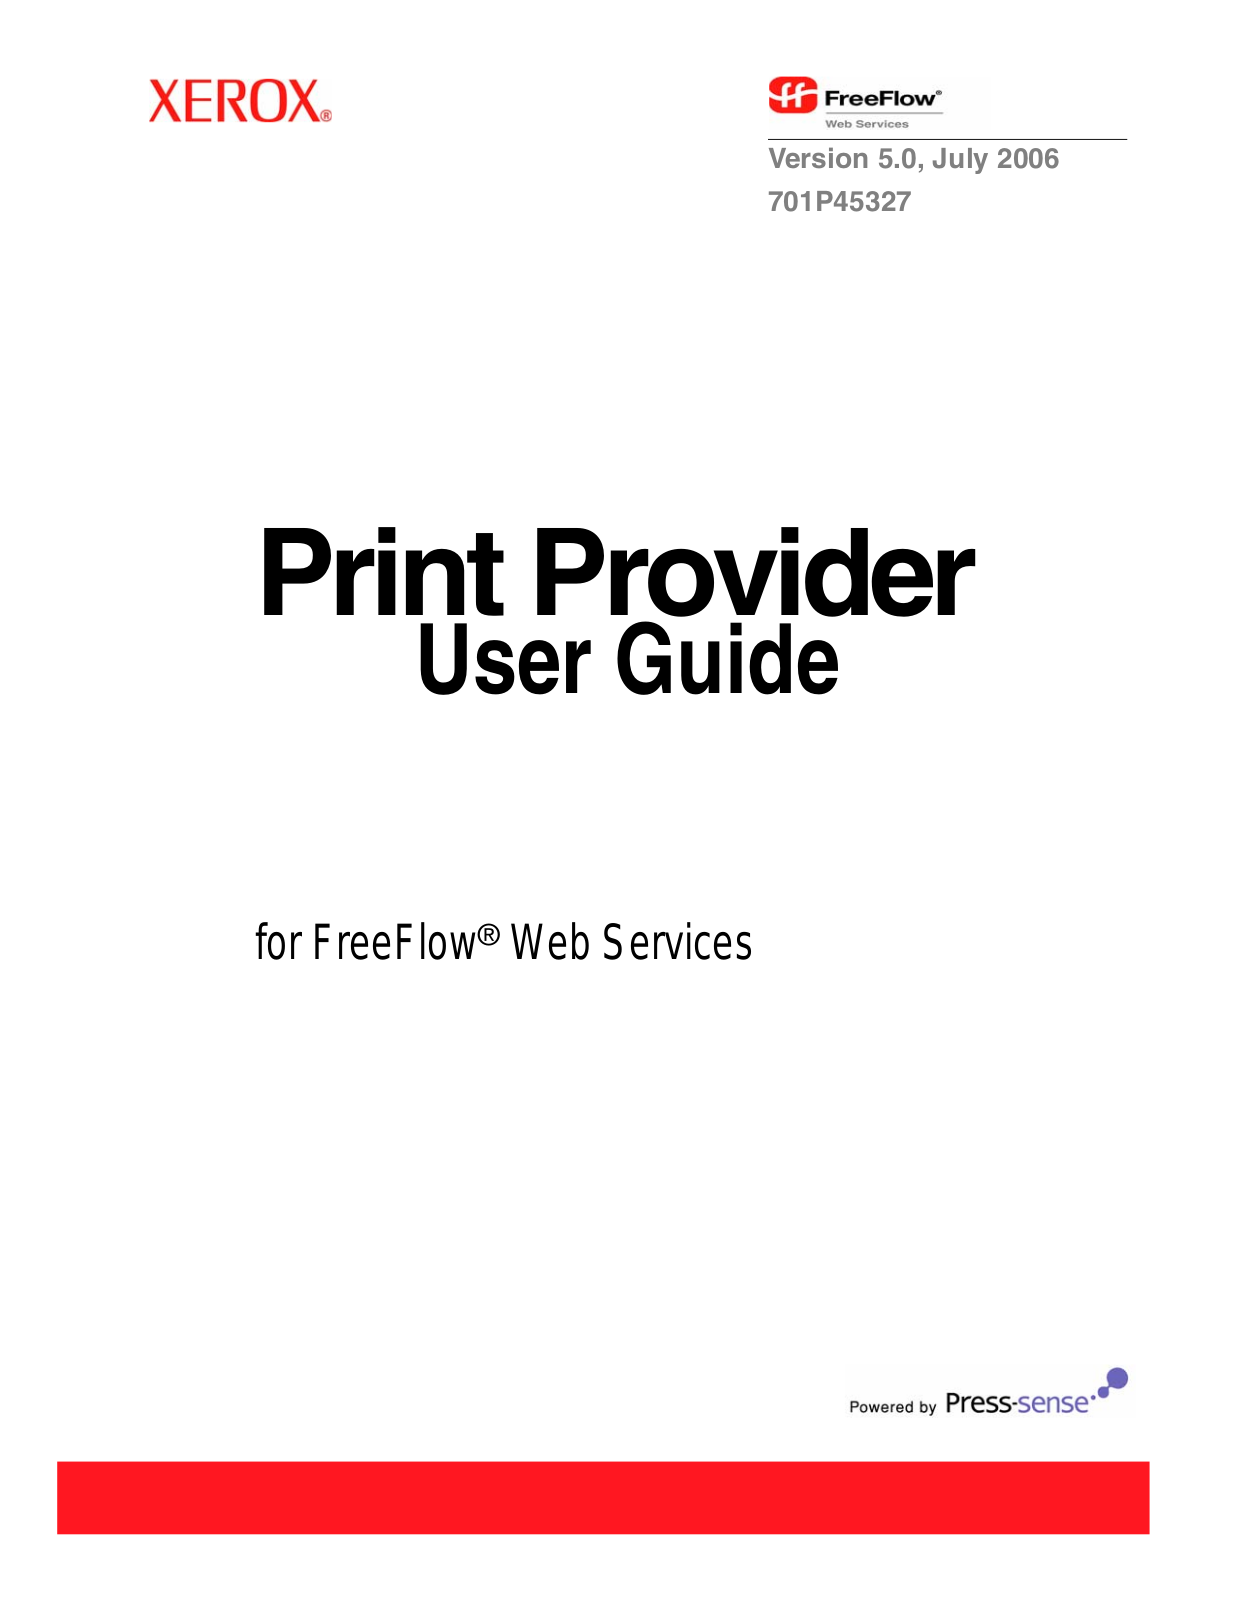 Xerox FreeFlow Web Services 5.0 User Guide